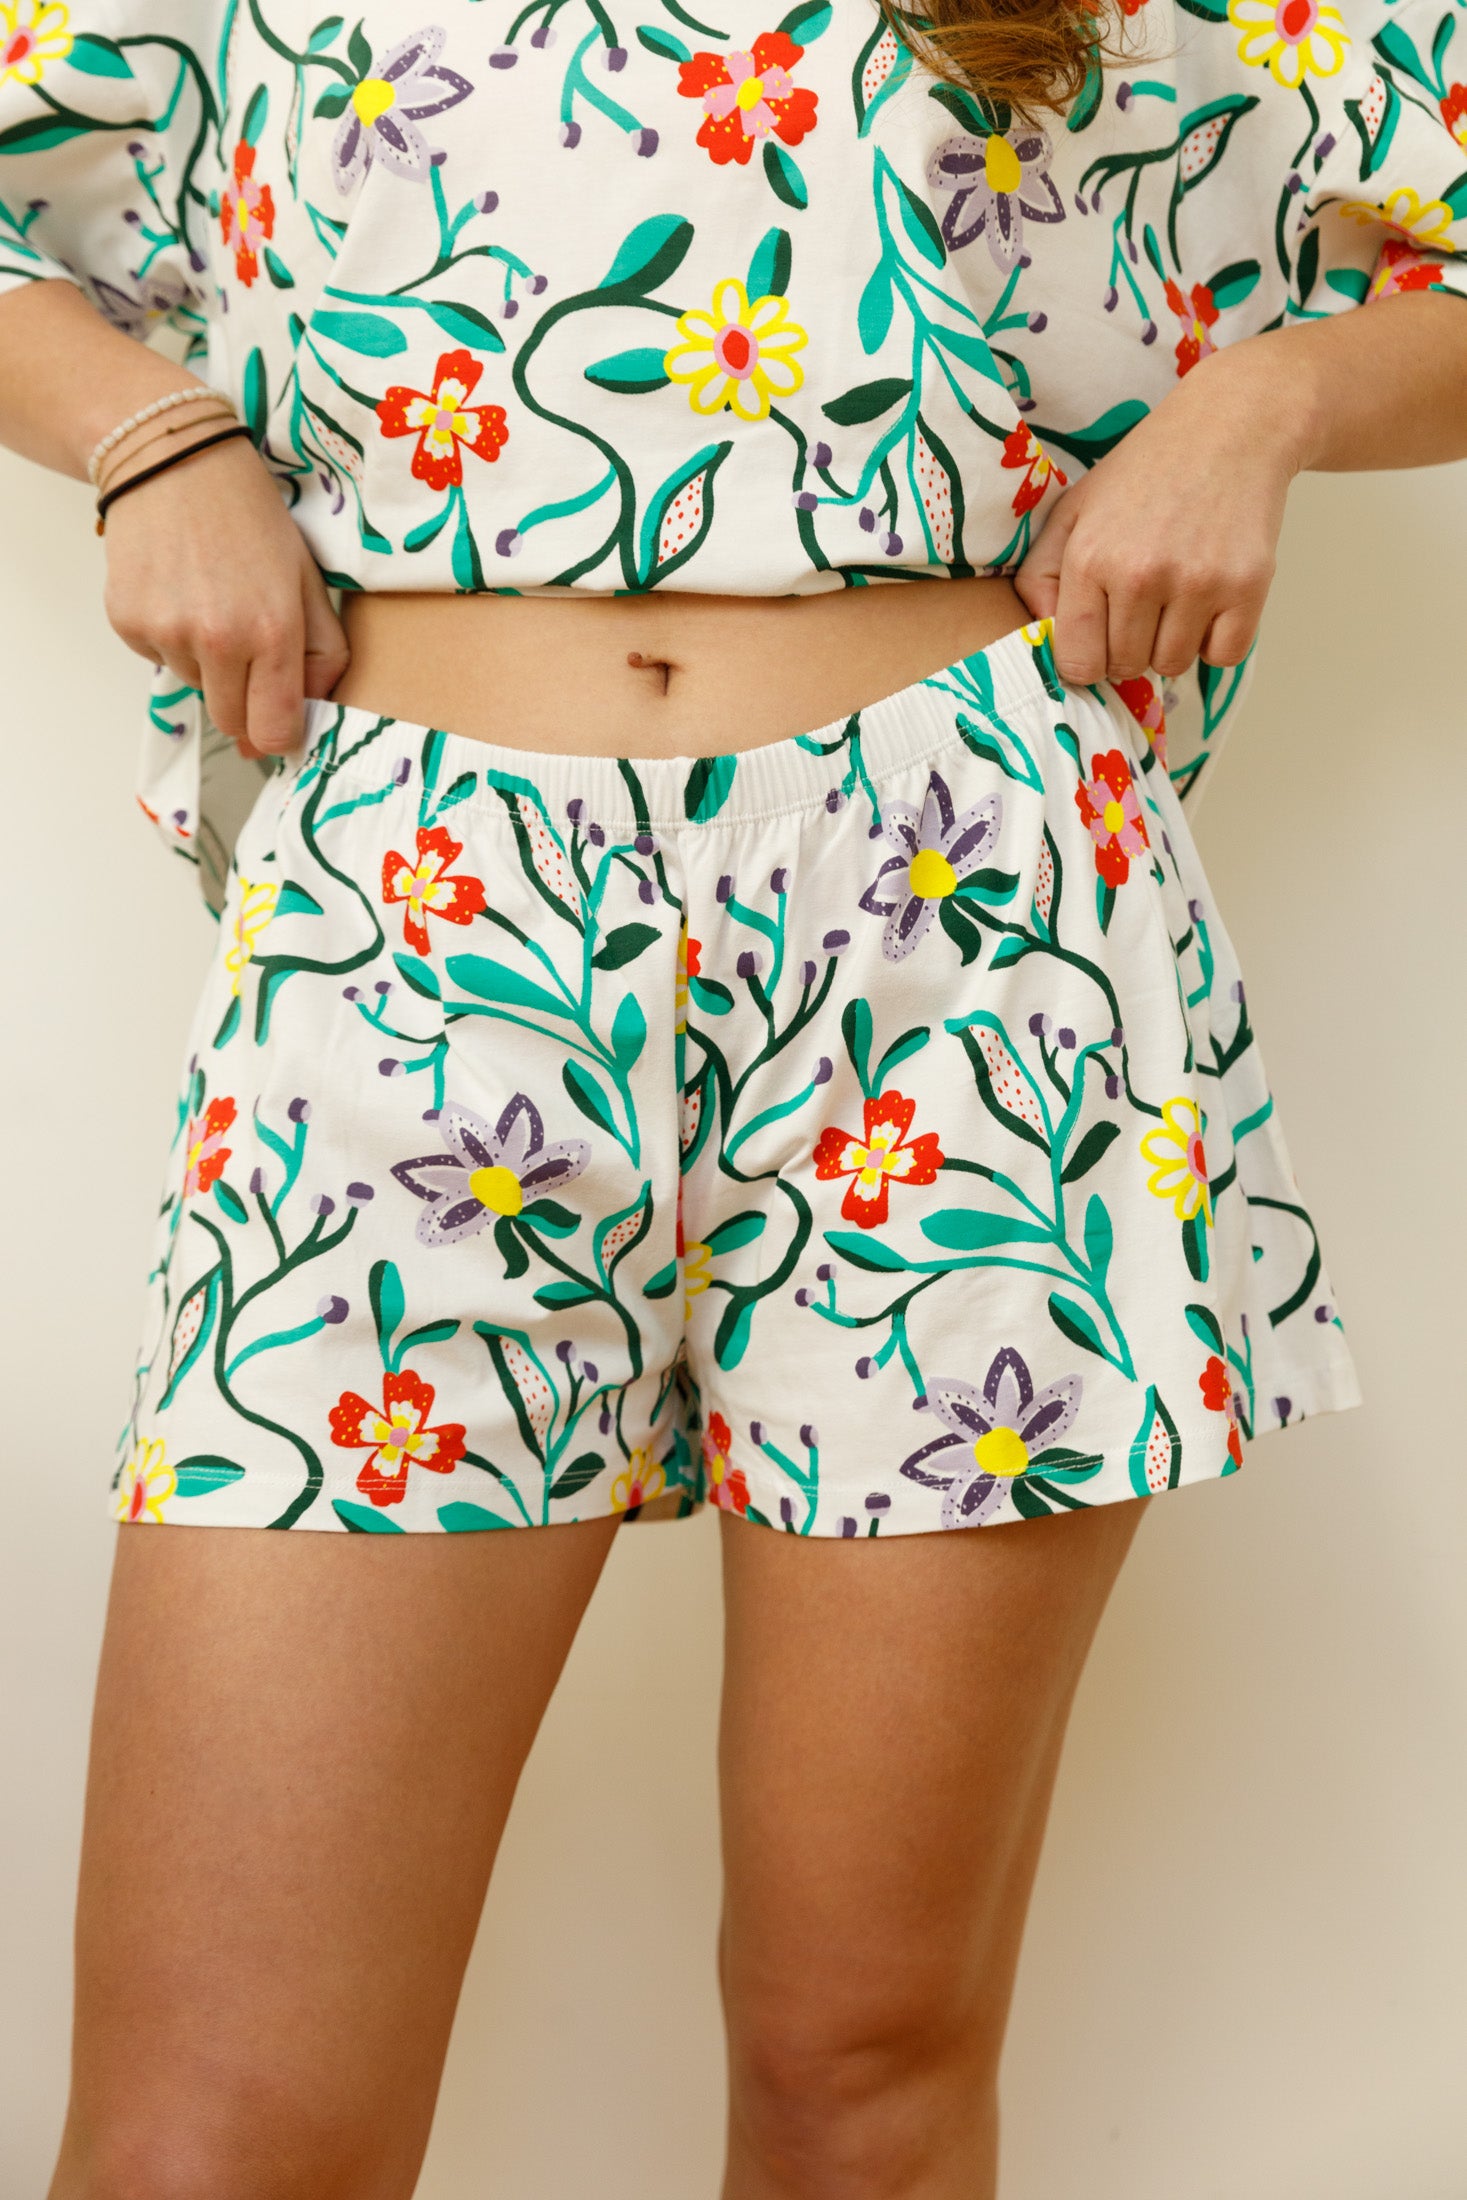 Pyjama femme short coton BIO - Pyjashort - We Are Jolies